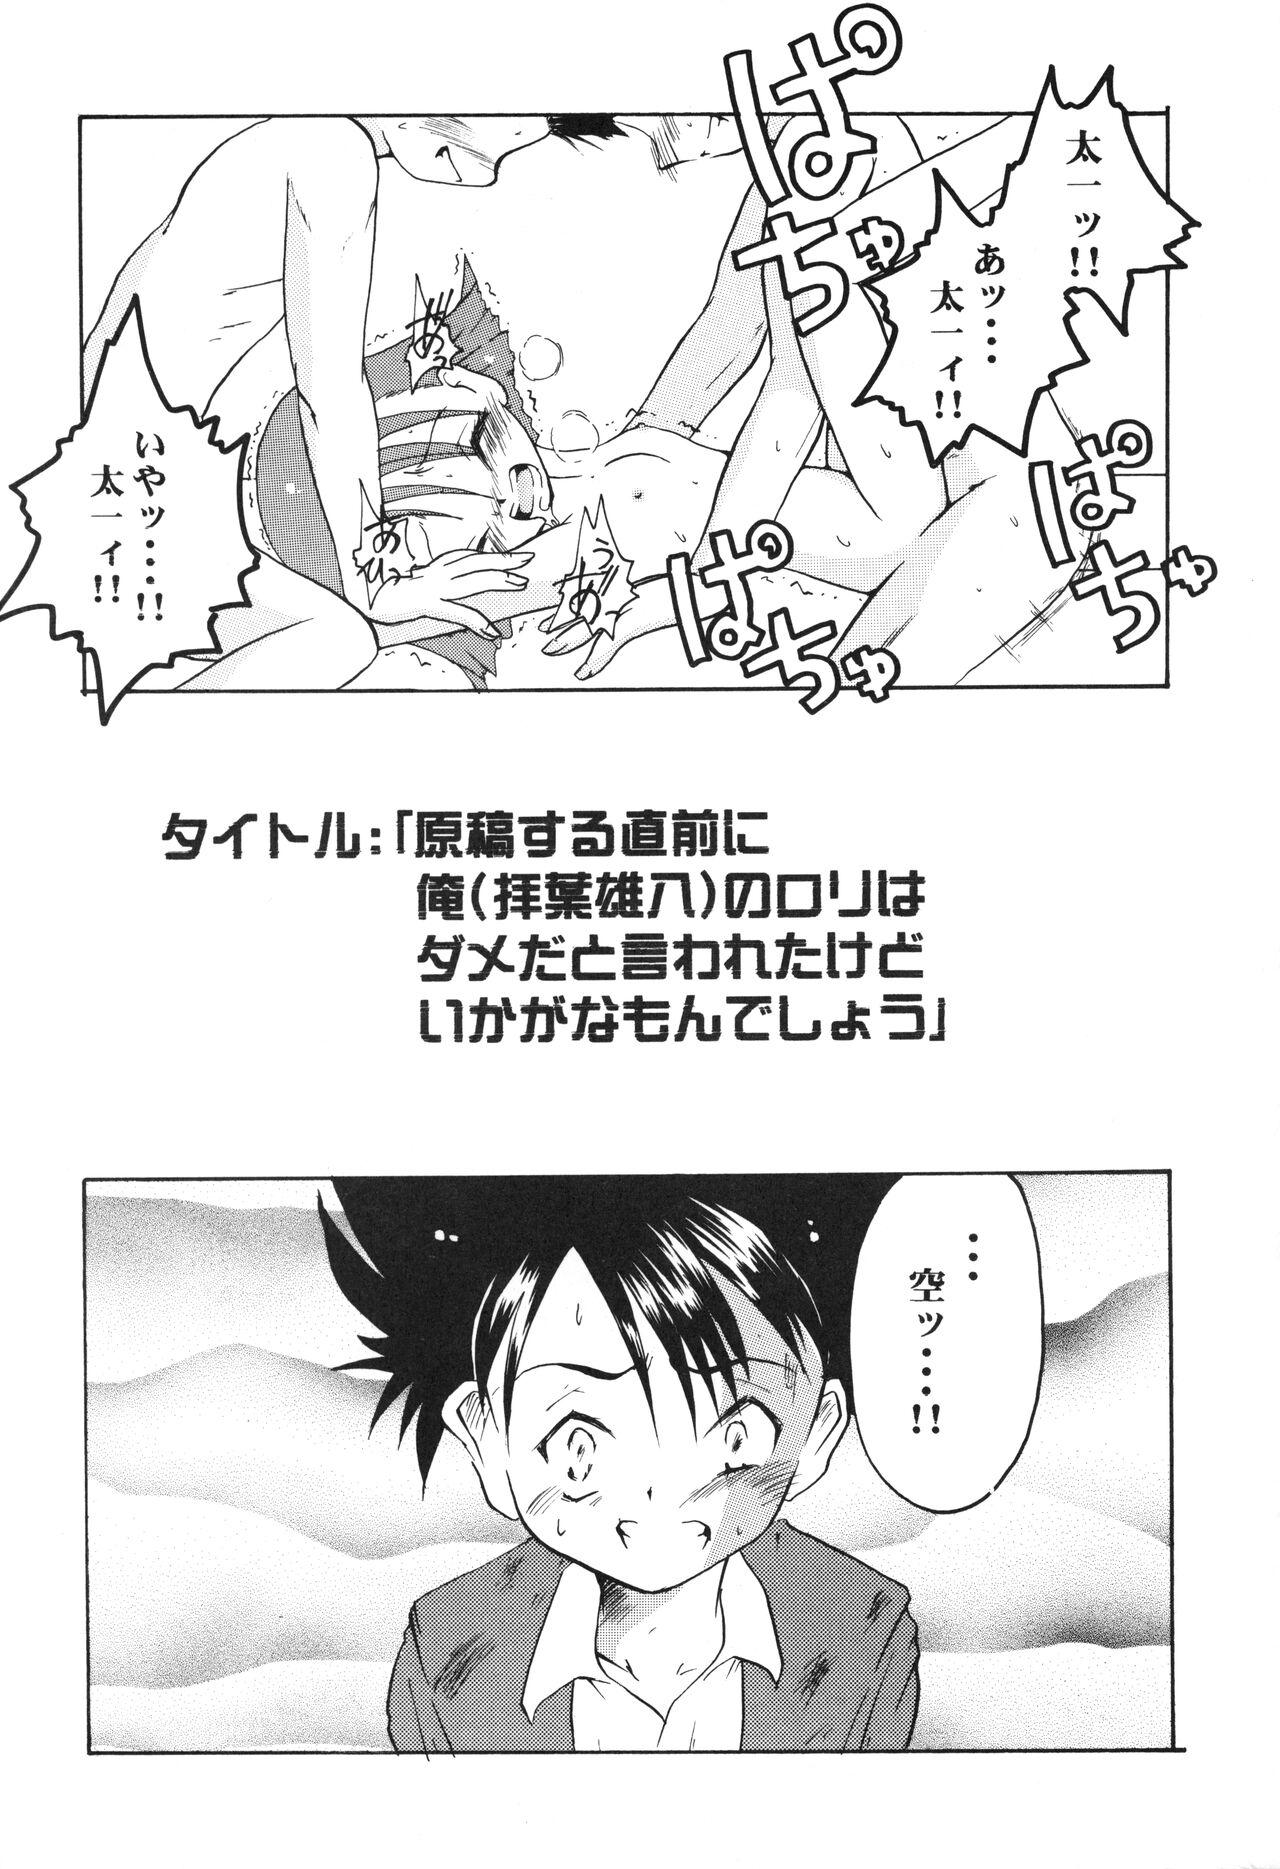 Nudity Get Sweet ”A” Low Phone ”DIGIMON ADVENTURE” - Digimon Cartoon - Page 8